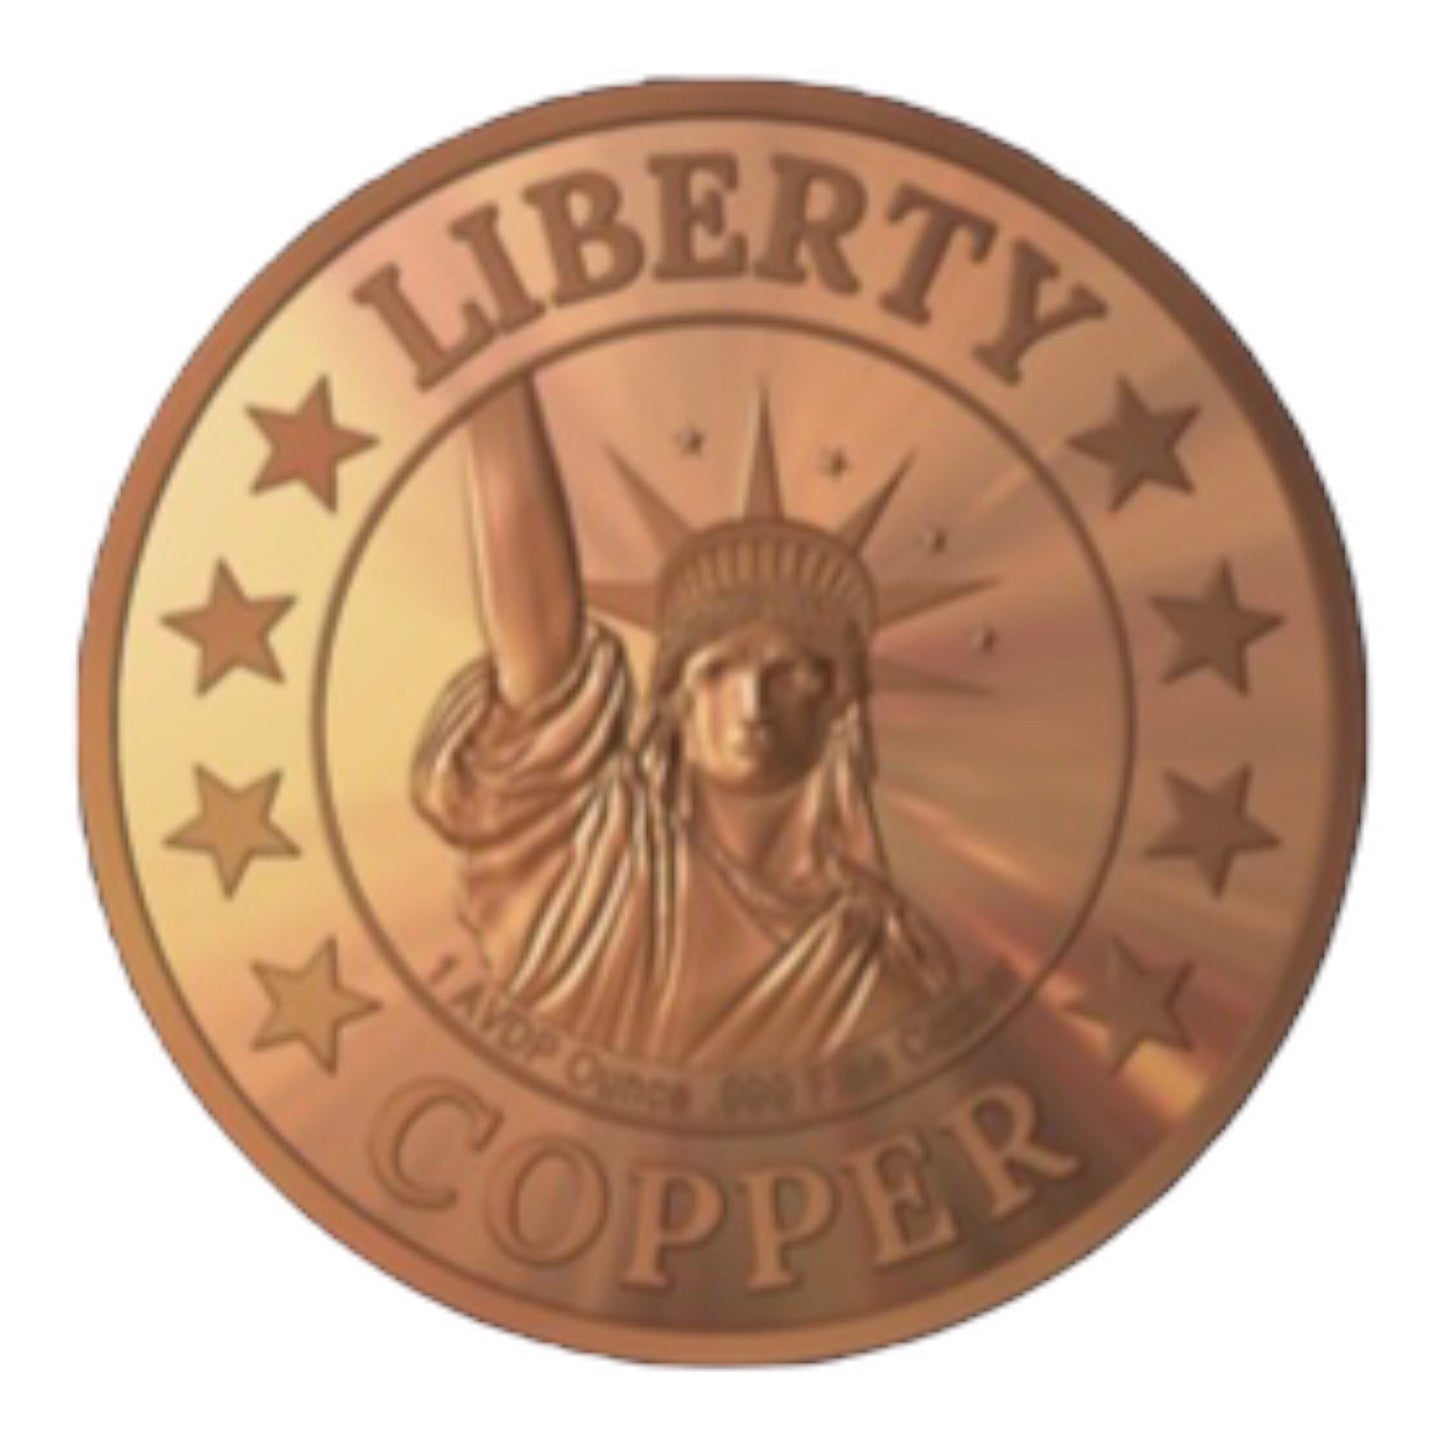 Liberty copper reverse